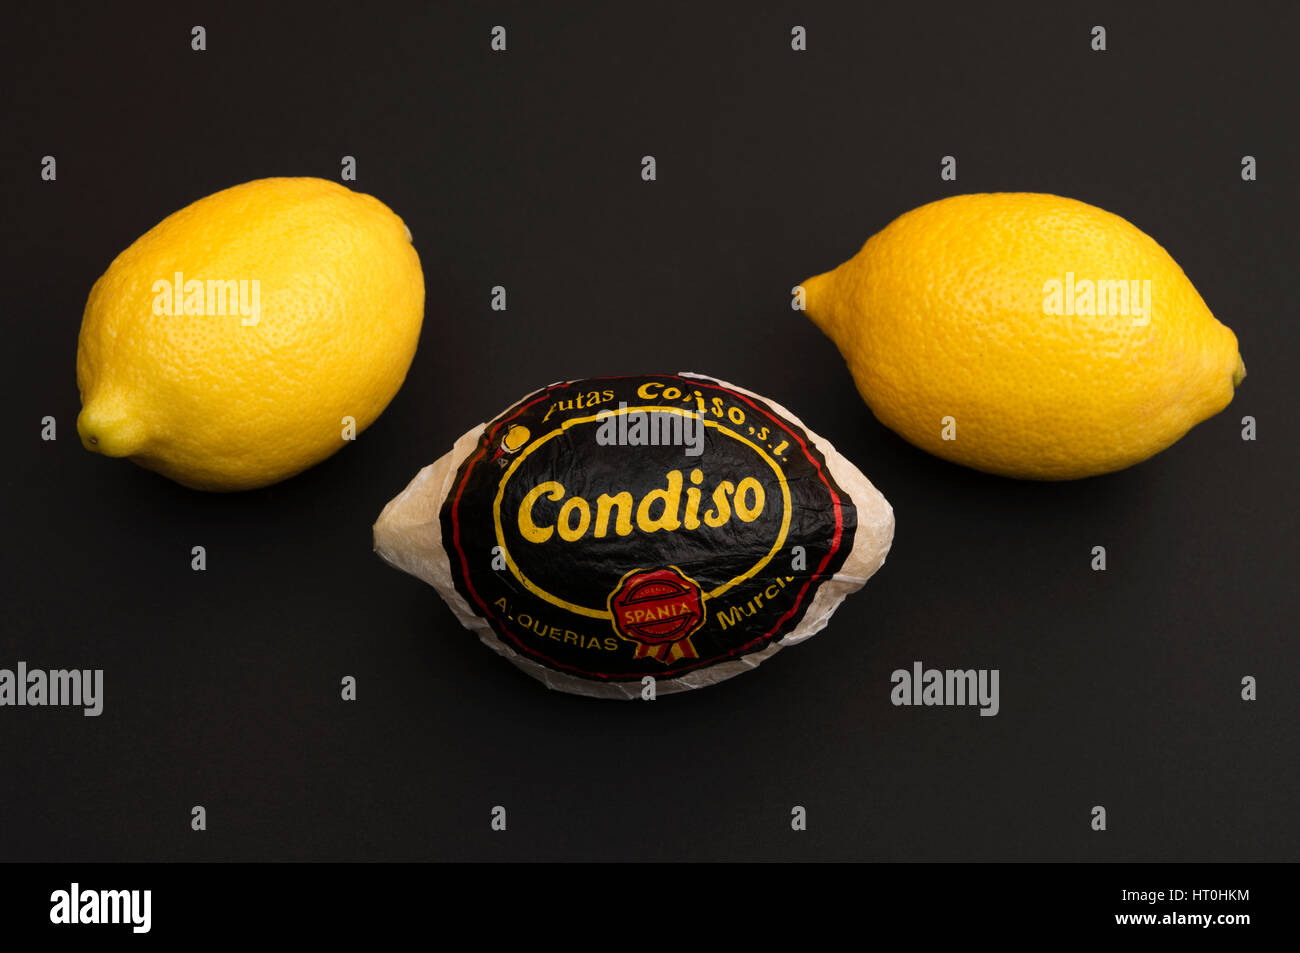 Condiso Spanish lemons Stock Photo